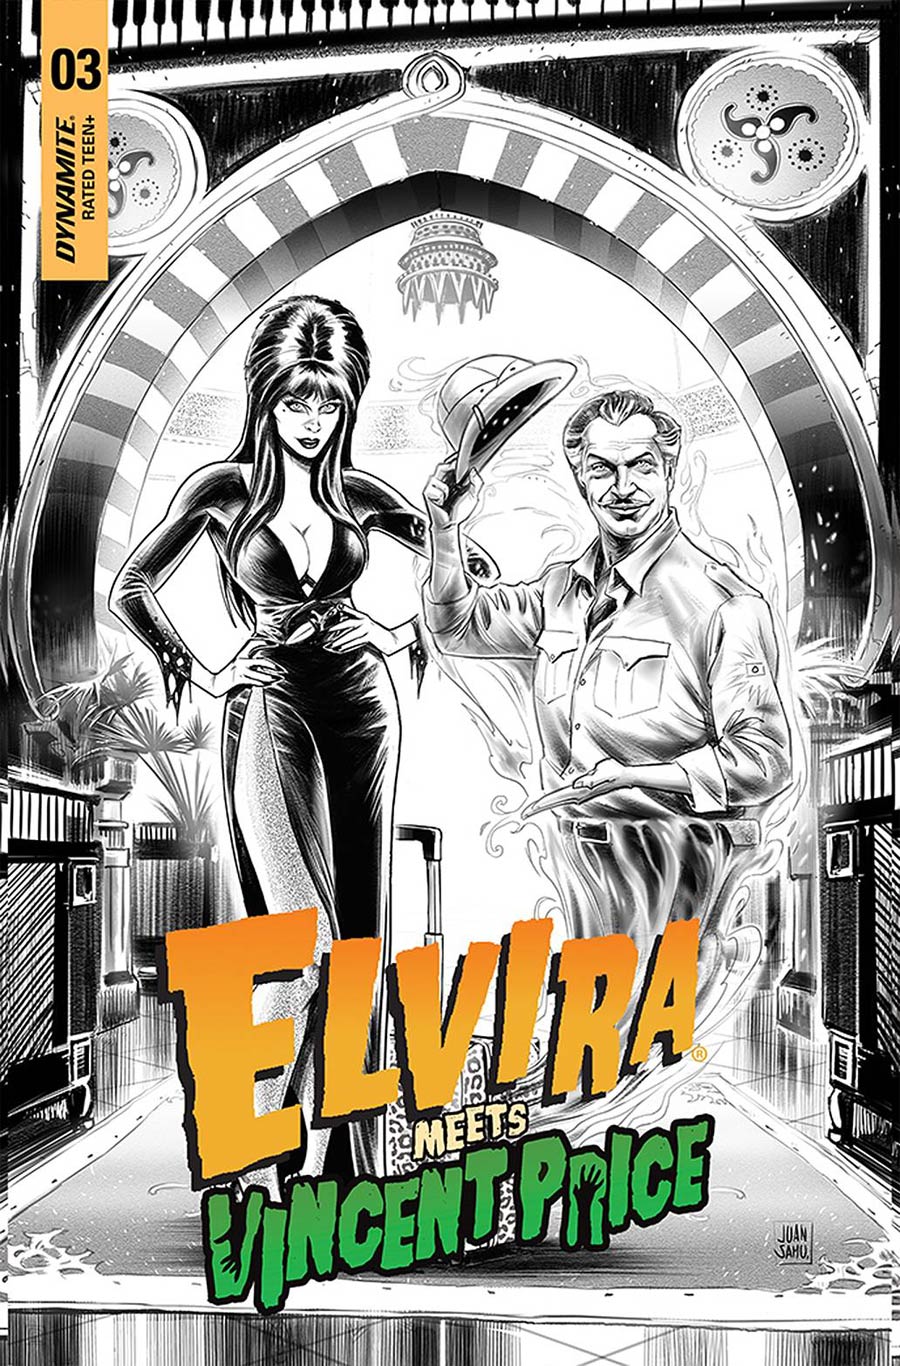 Elvira Meets Vincent Price #3 Cover F Incentive Juan Samu Black & White Line Art Cover